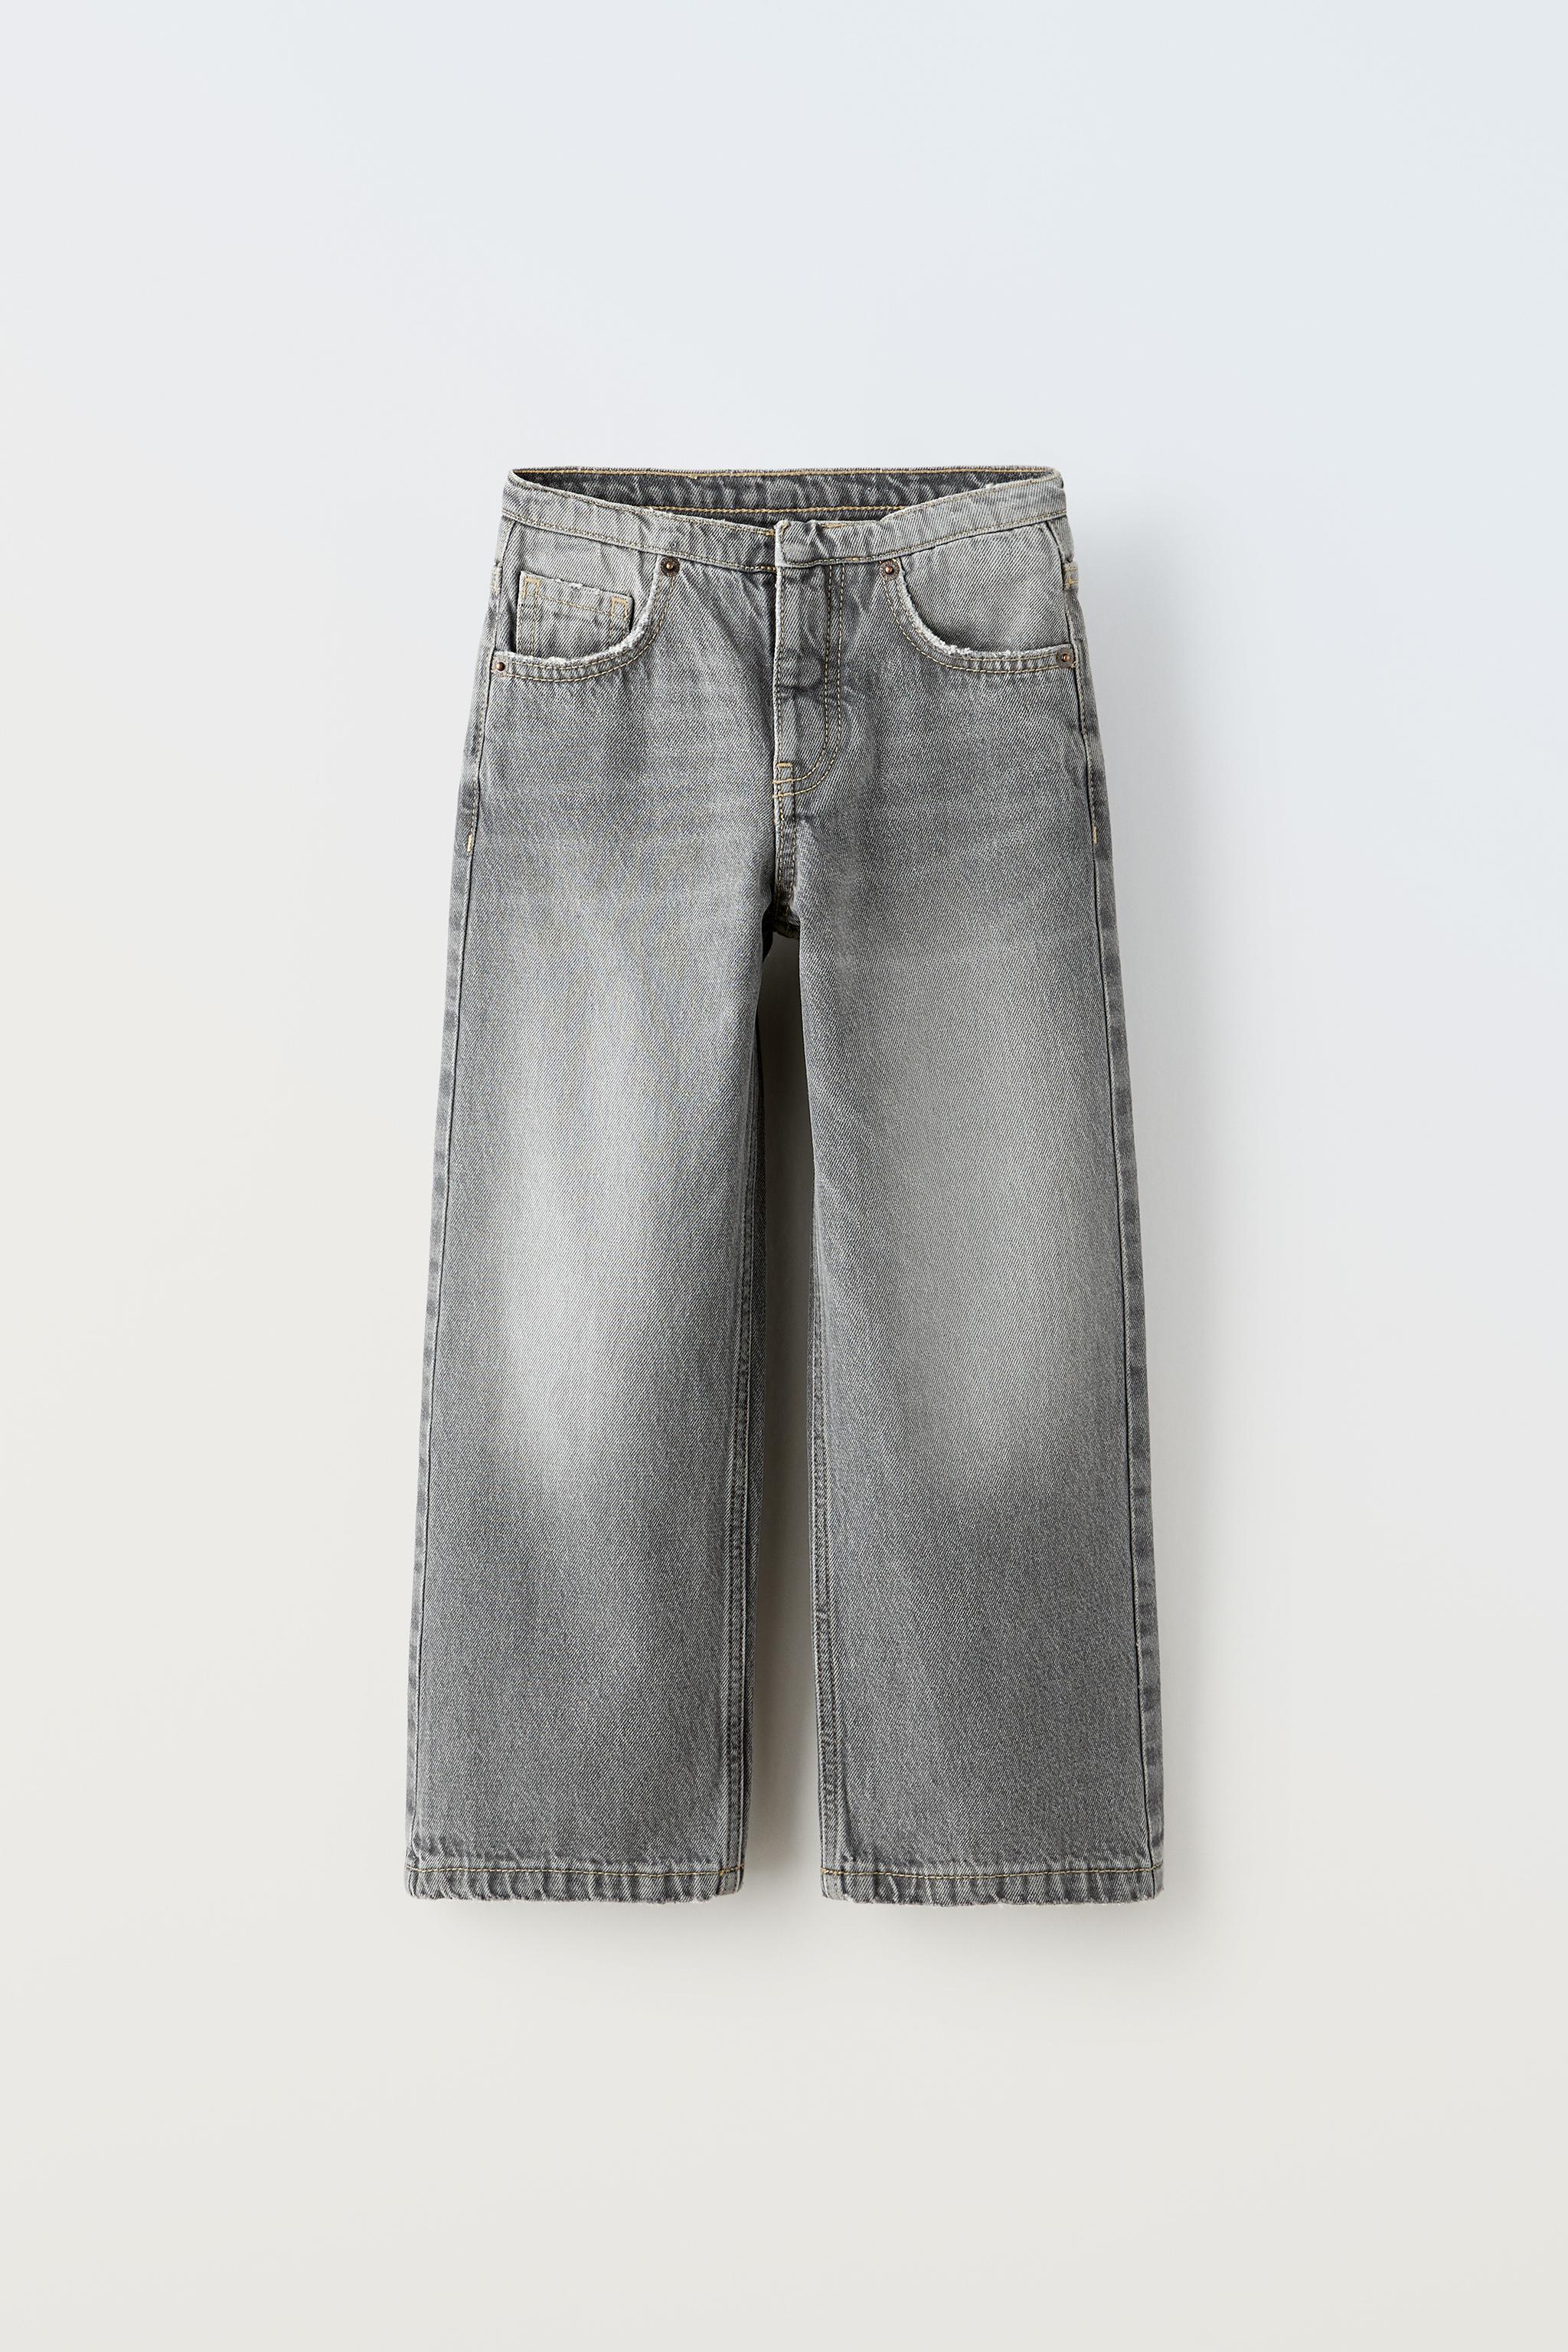 Abdeen Moda » Zara wide leg jeans